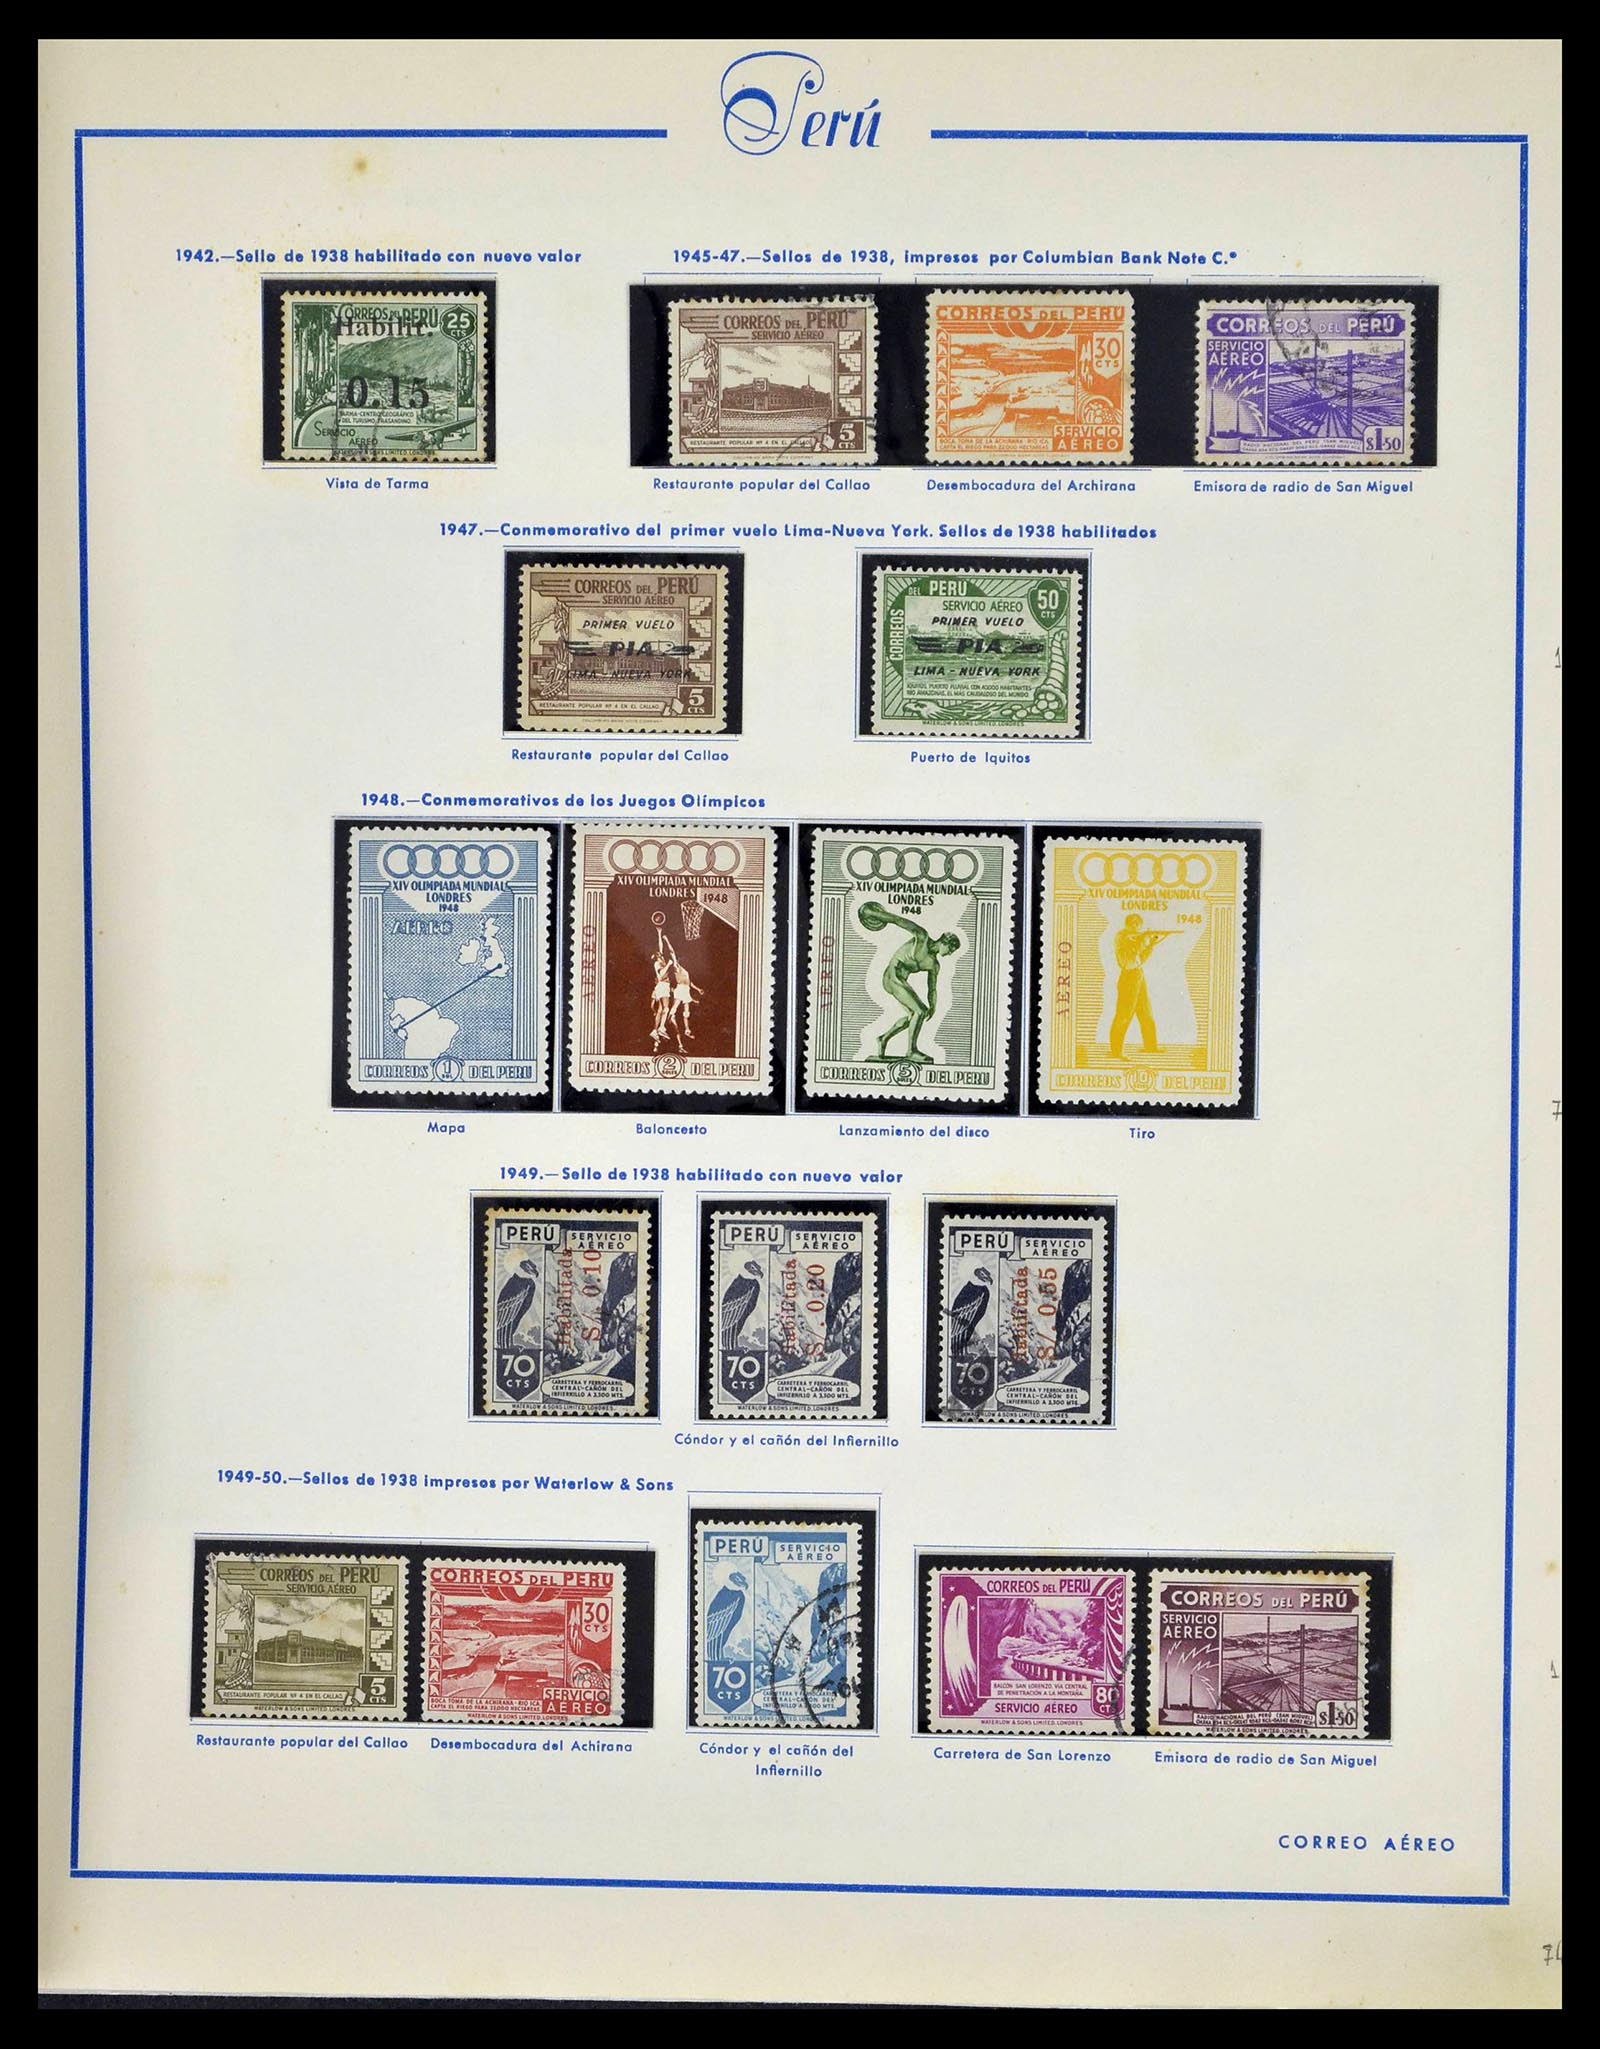 39214 0048 - Stamp collection 39214 Peru 1857-1981.